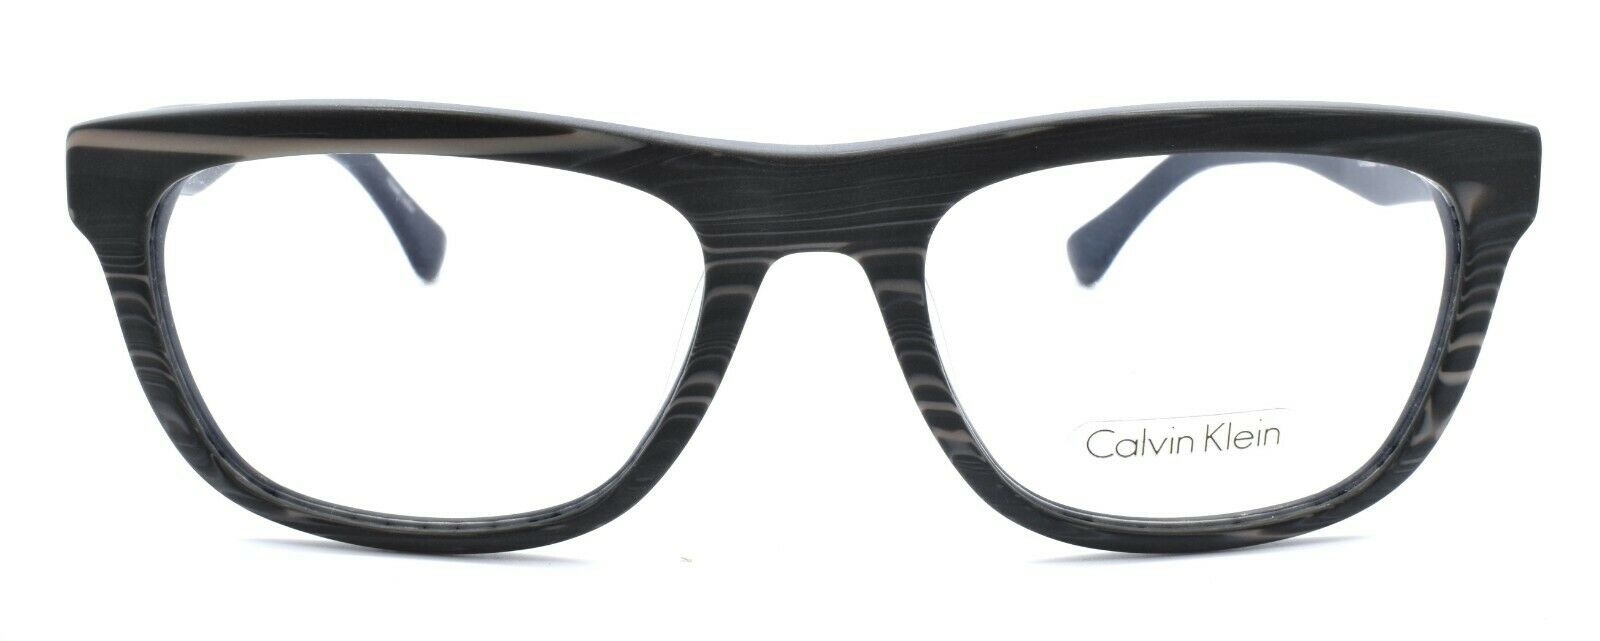 2-Calvin Klein CK5886 278 Men's Eyeglasses Frames 54-19-140 Blue Wood-750779084984-IKSpecs